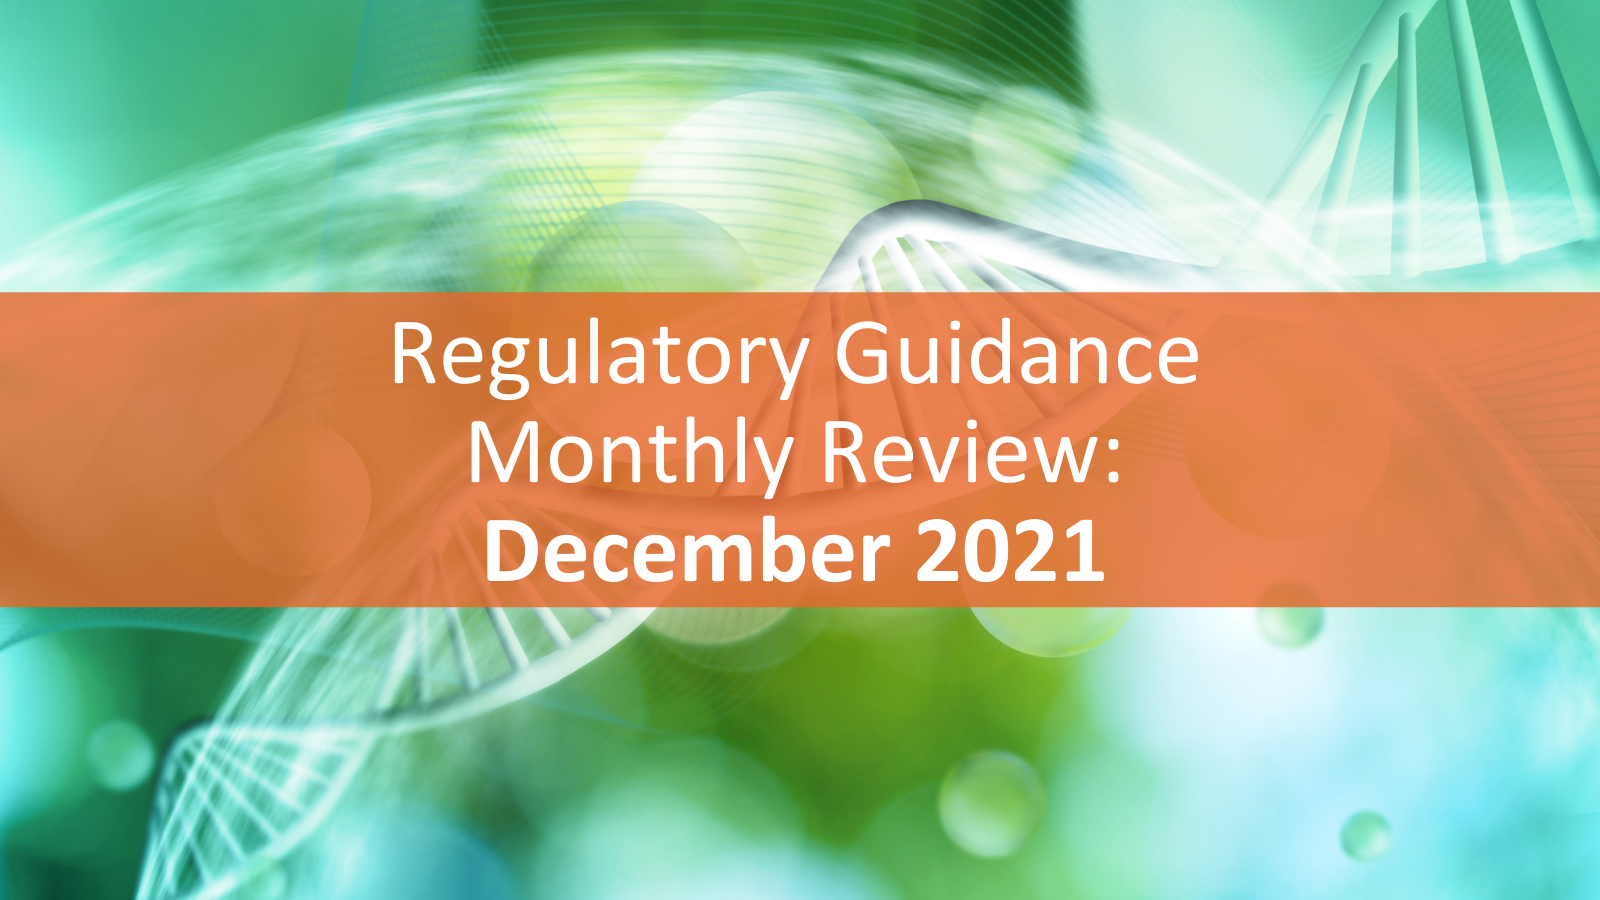 Regulatory Guidance Monthly Review - Dec 2021